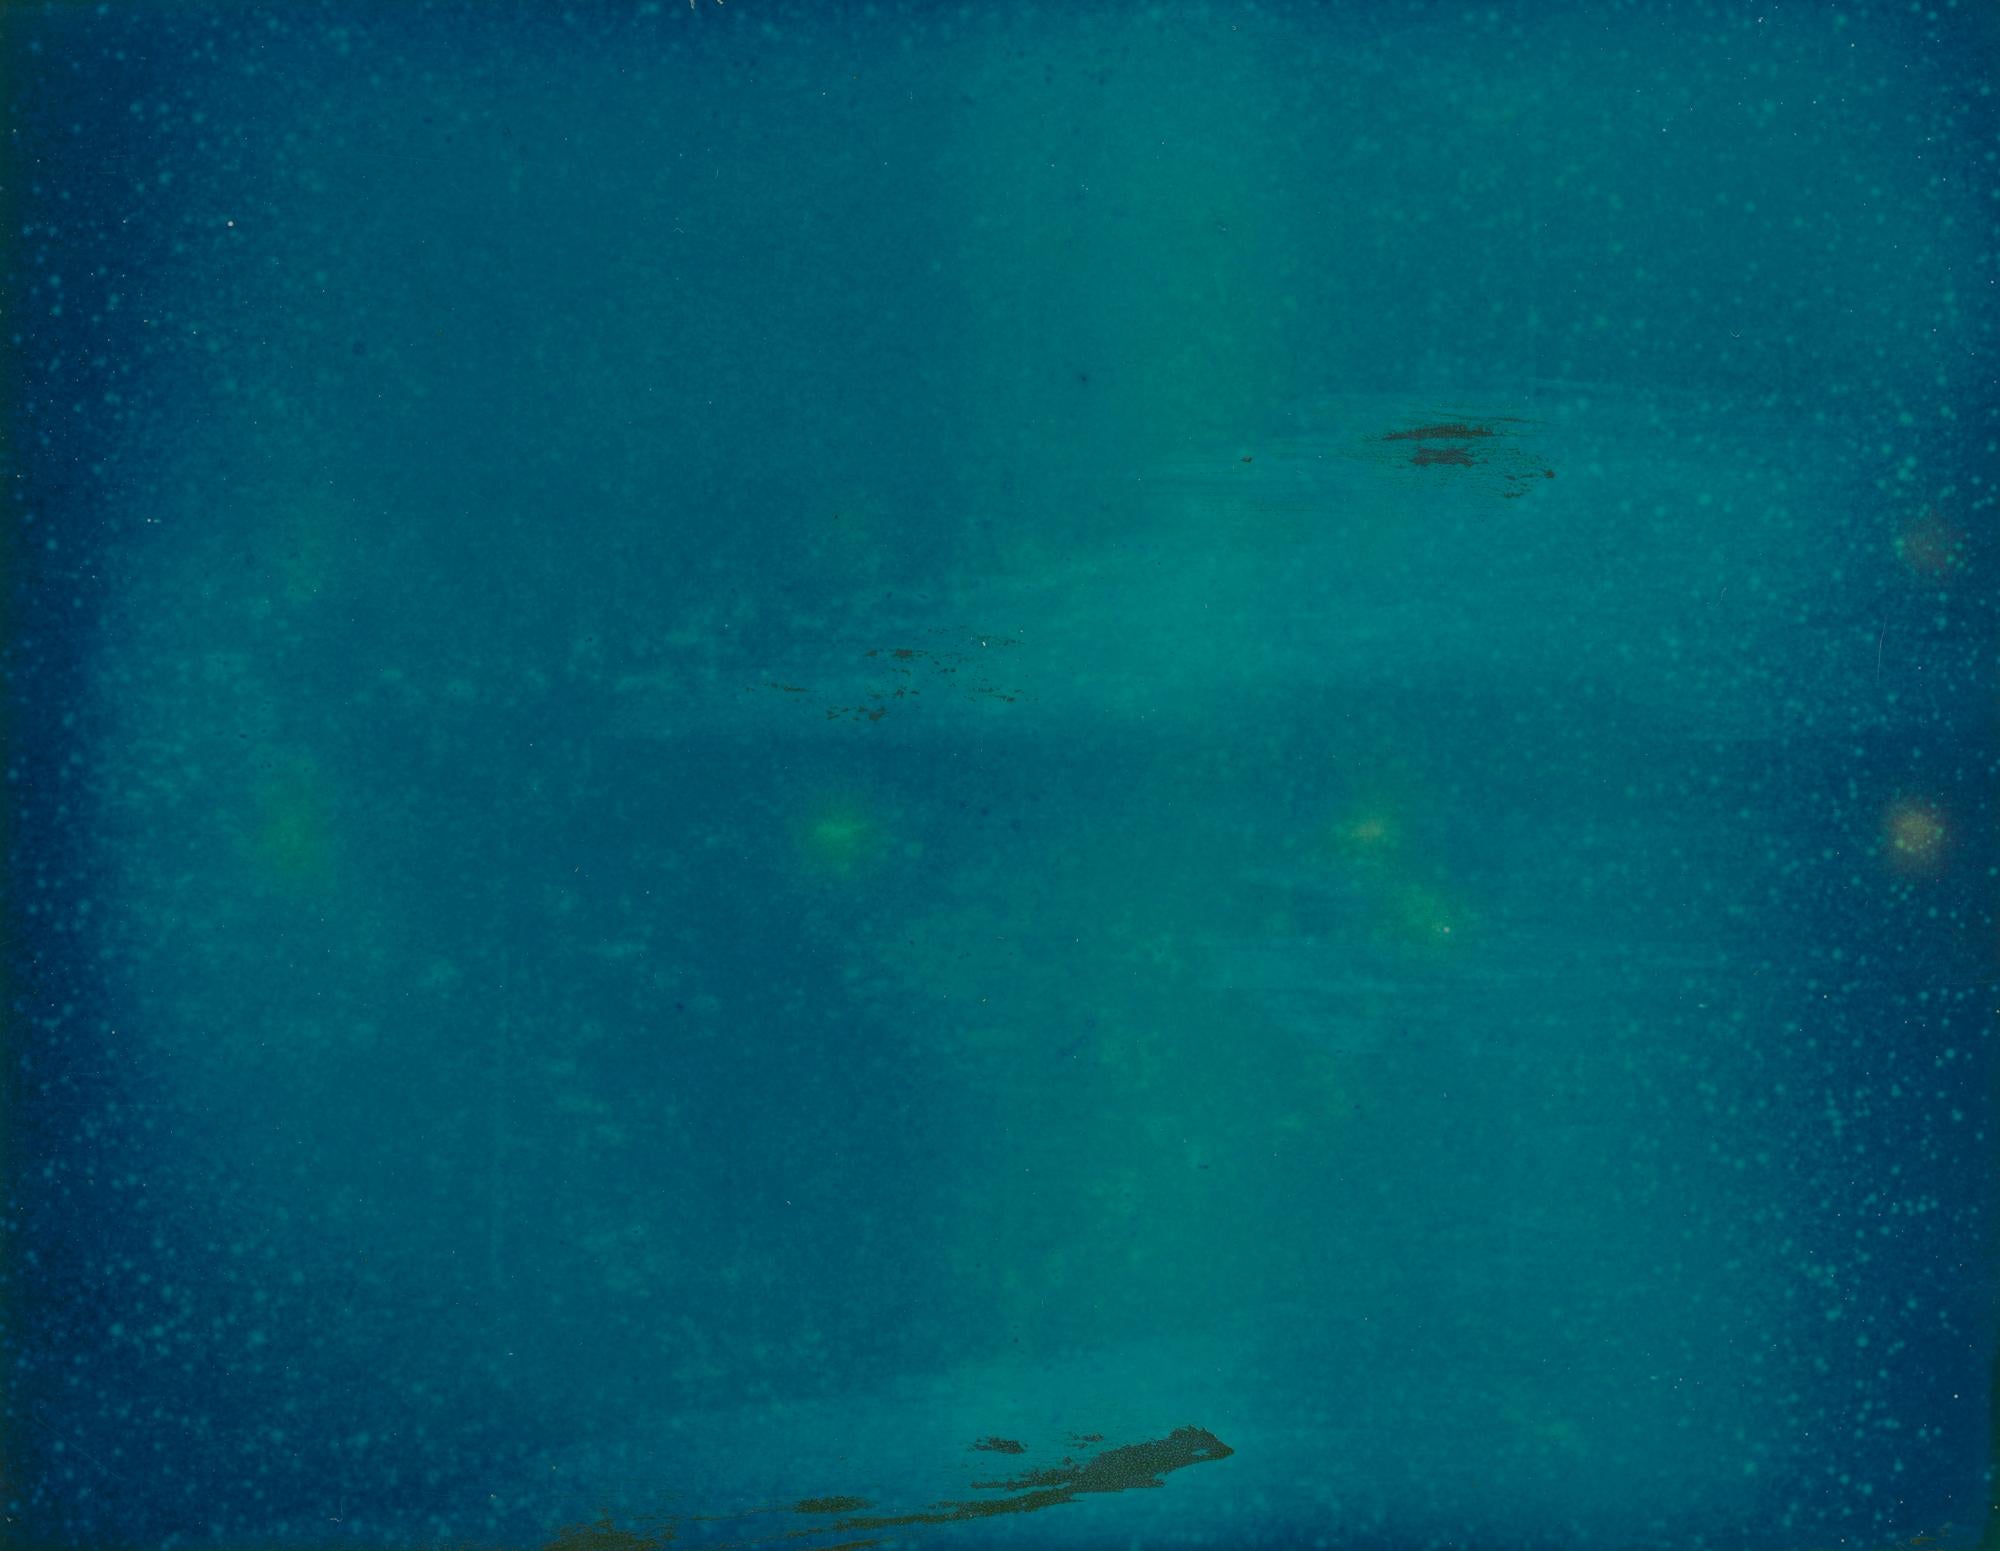 Stefanie Schneider Landscape Photograph - Blue II (Deconstructivism) - Contemporary, Expired Polaroid